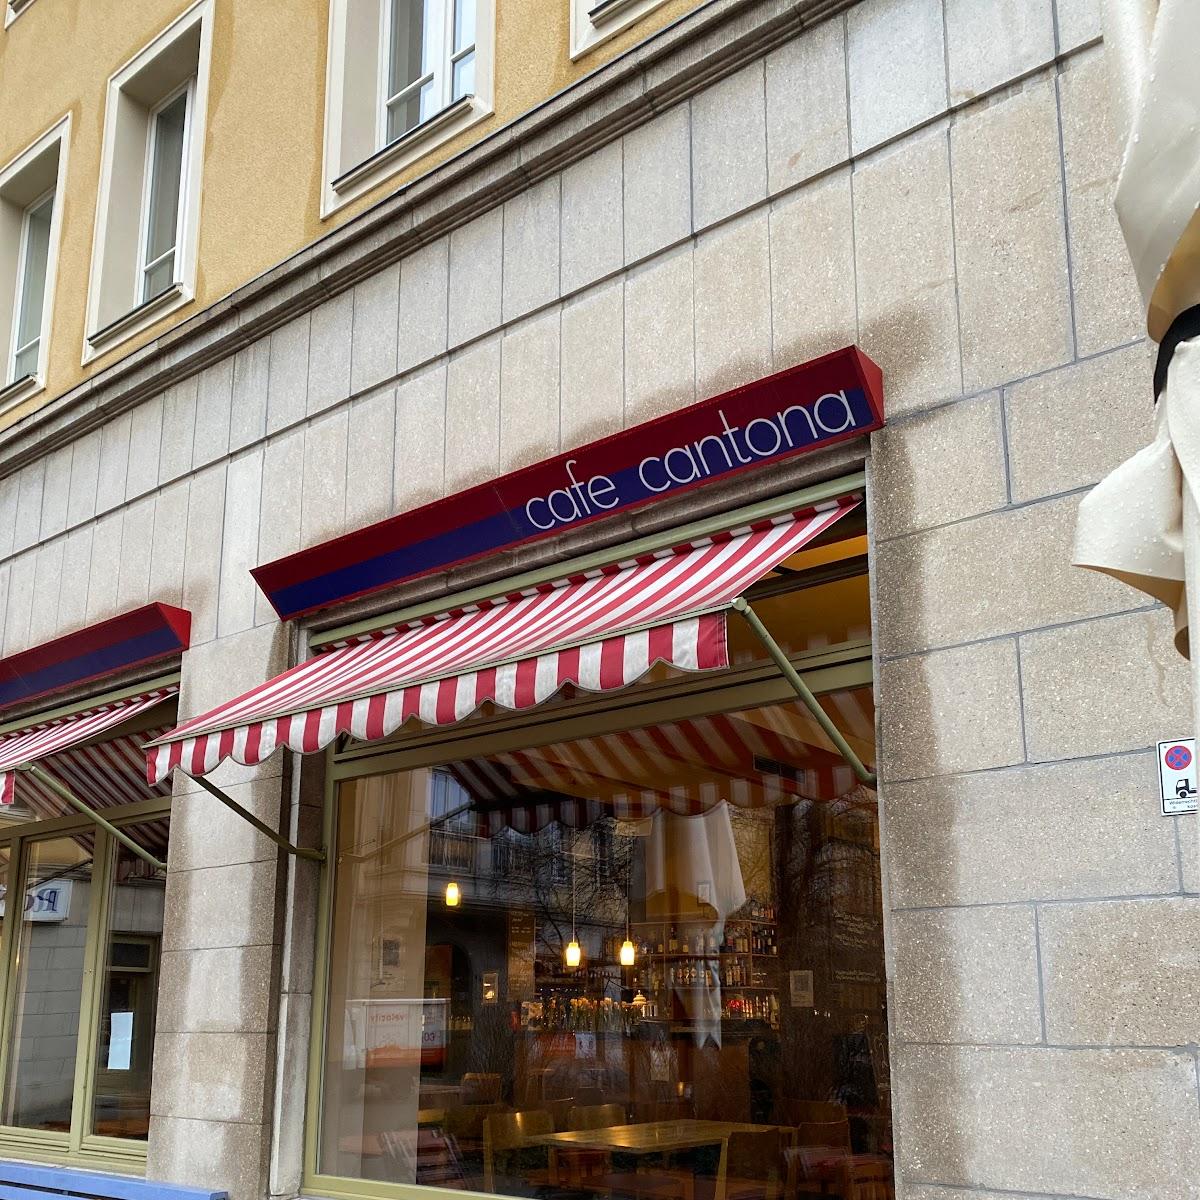 Restaurant "Café Cantona" in Leipzig